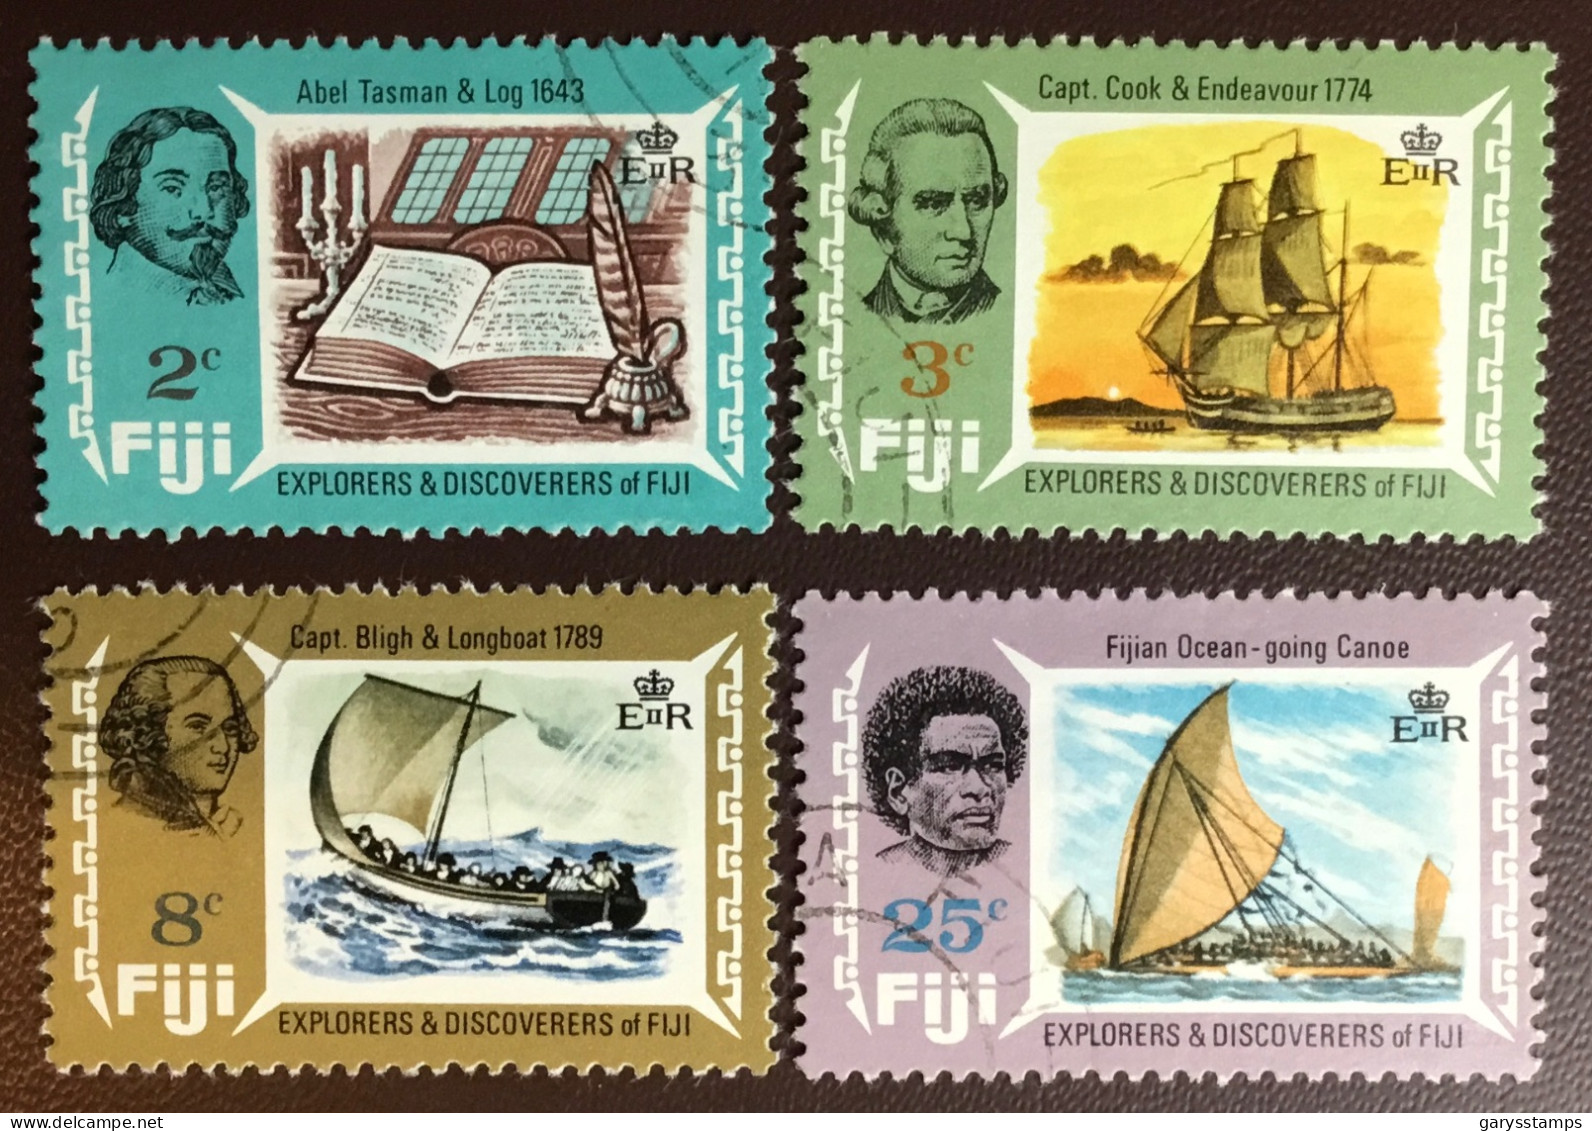 Fiji 1970 Explorers FU - Fidji (...-1970)